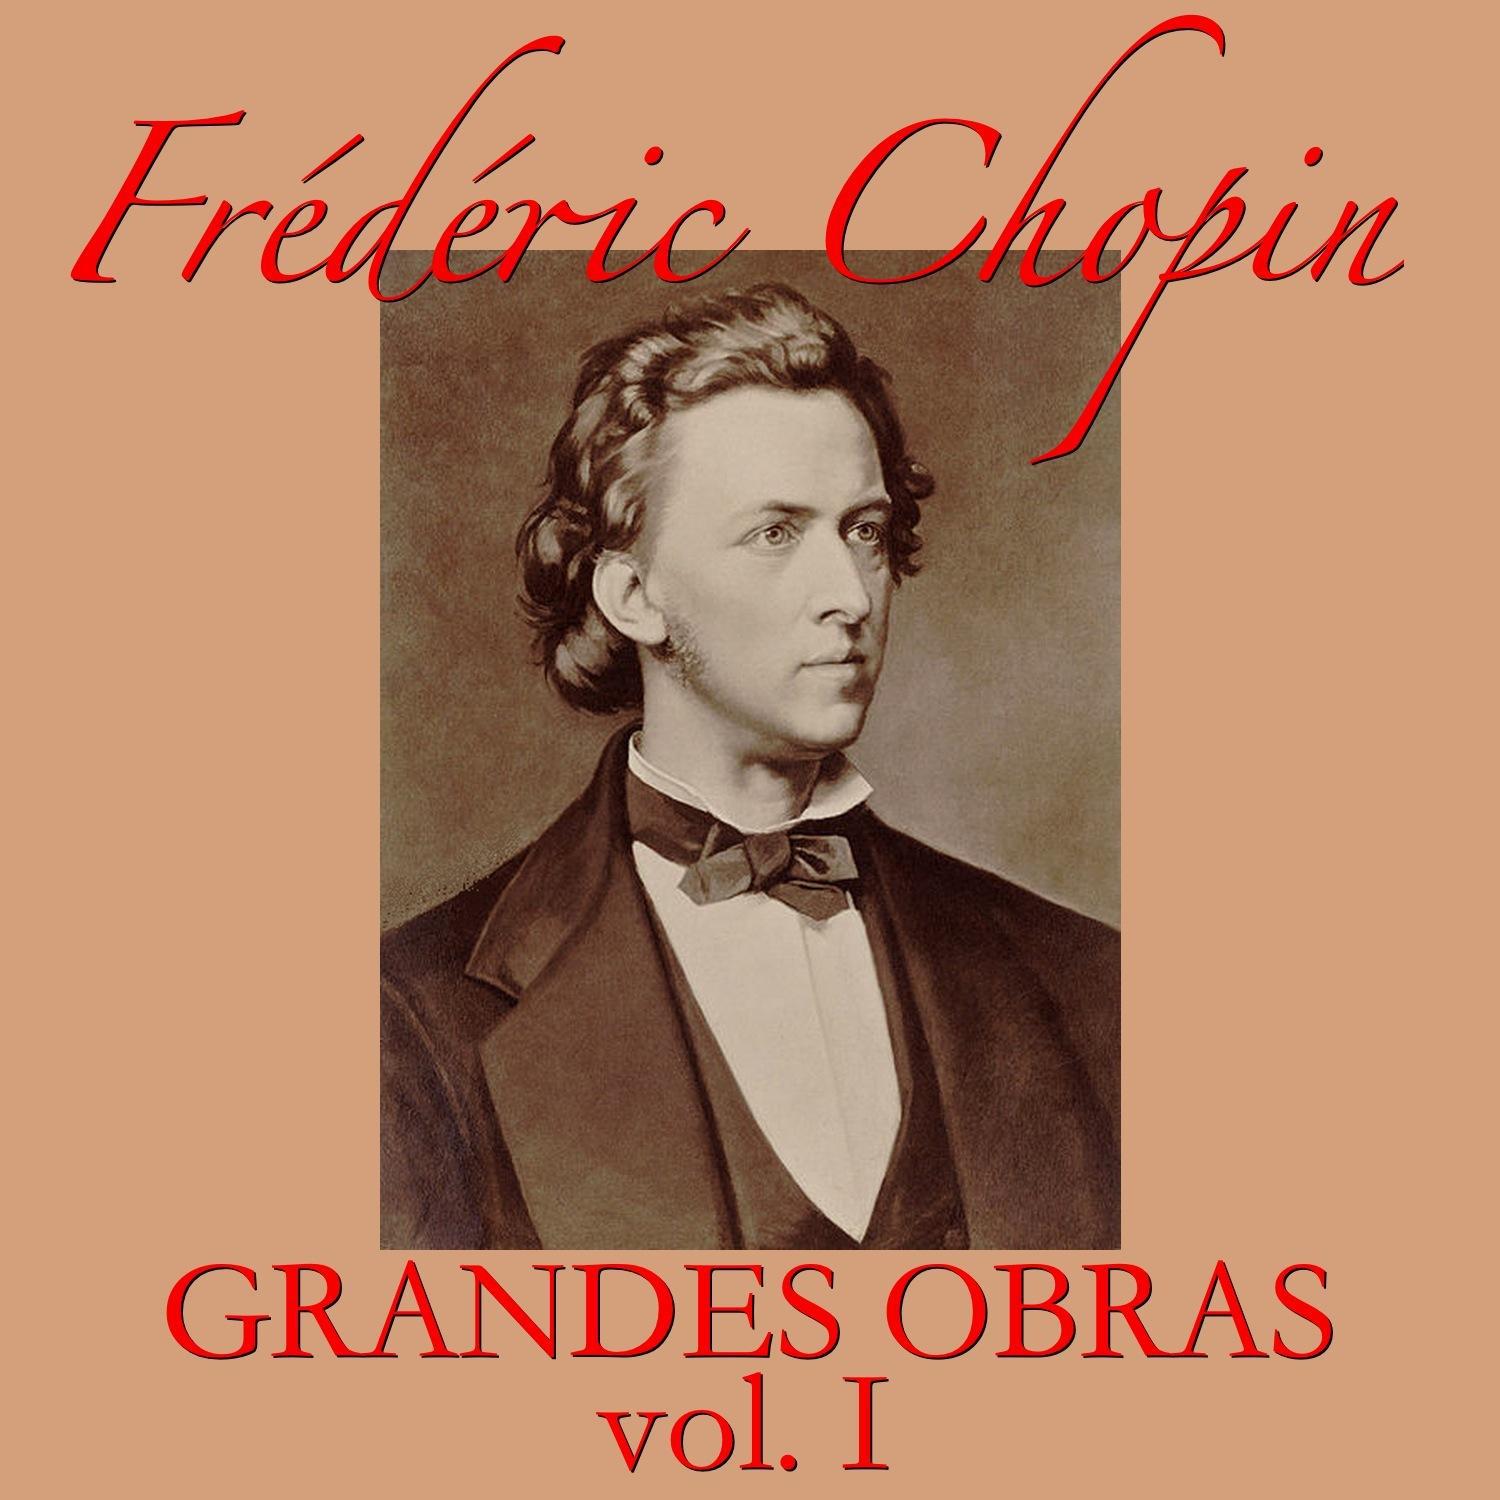 Frédéric Chopin Grandes Obras Vol. I